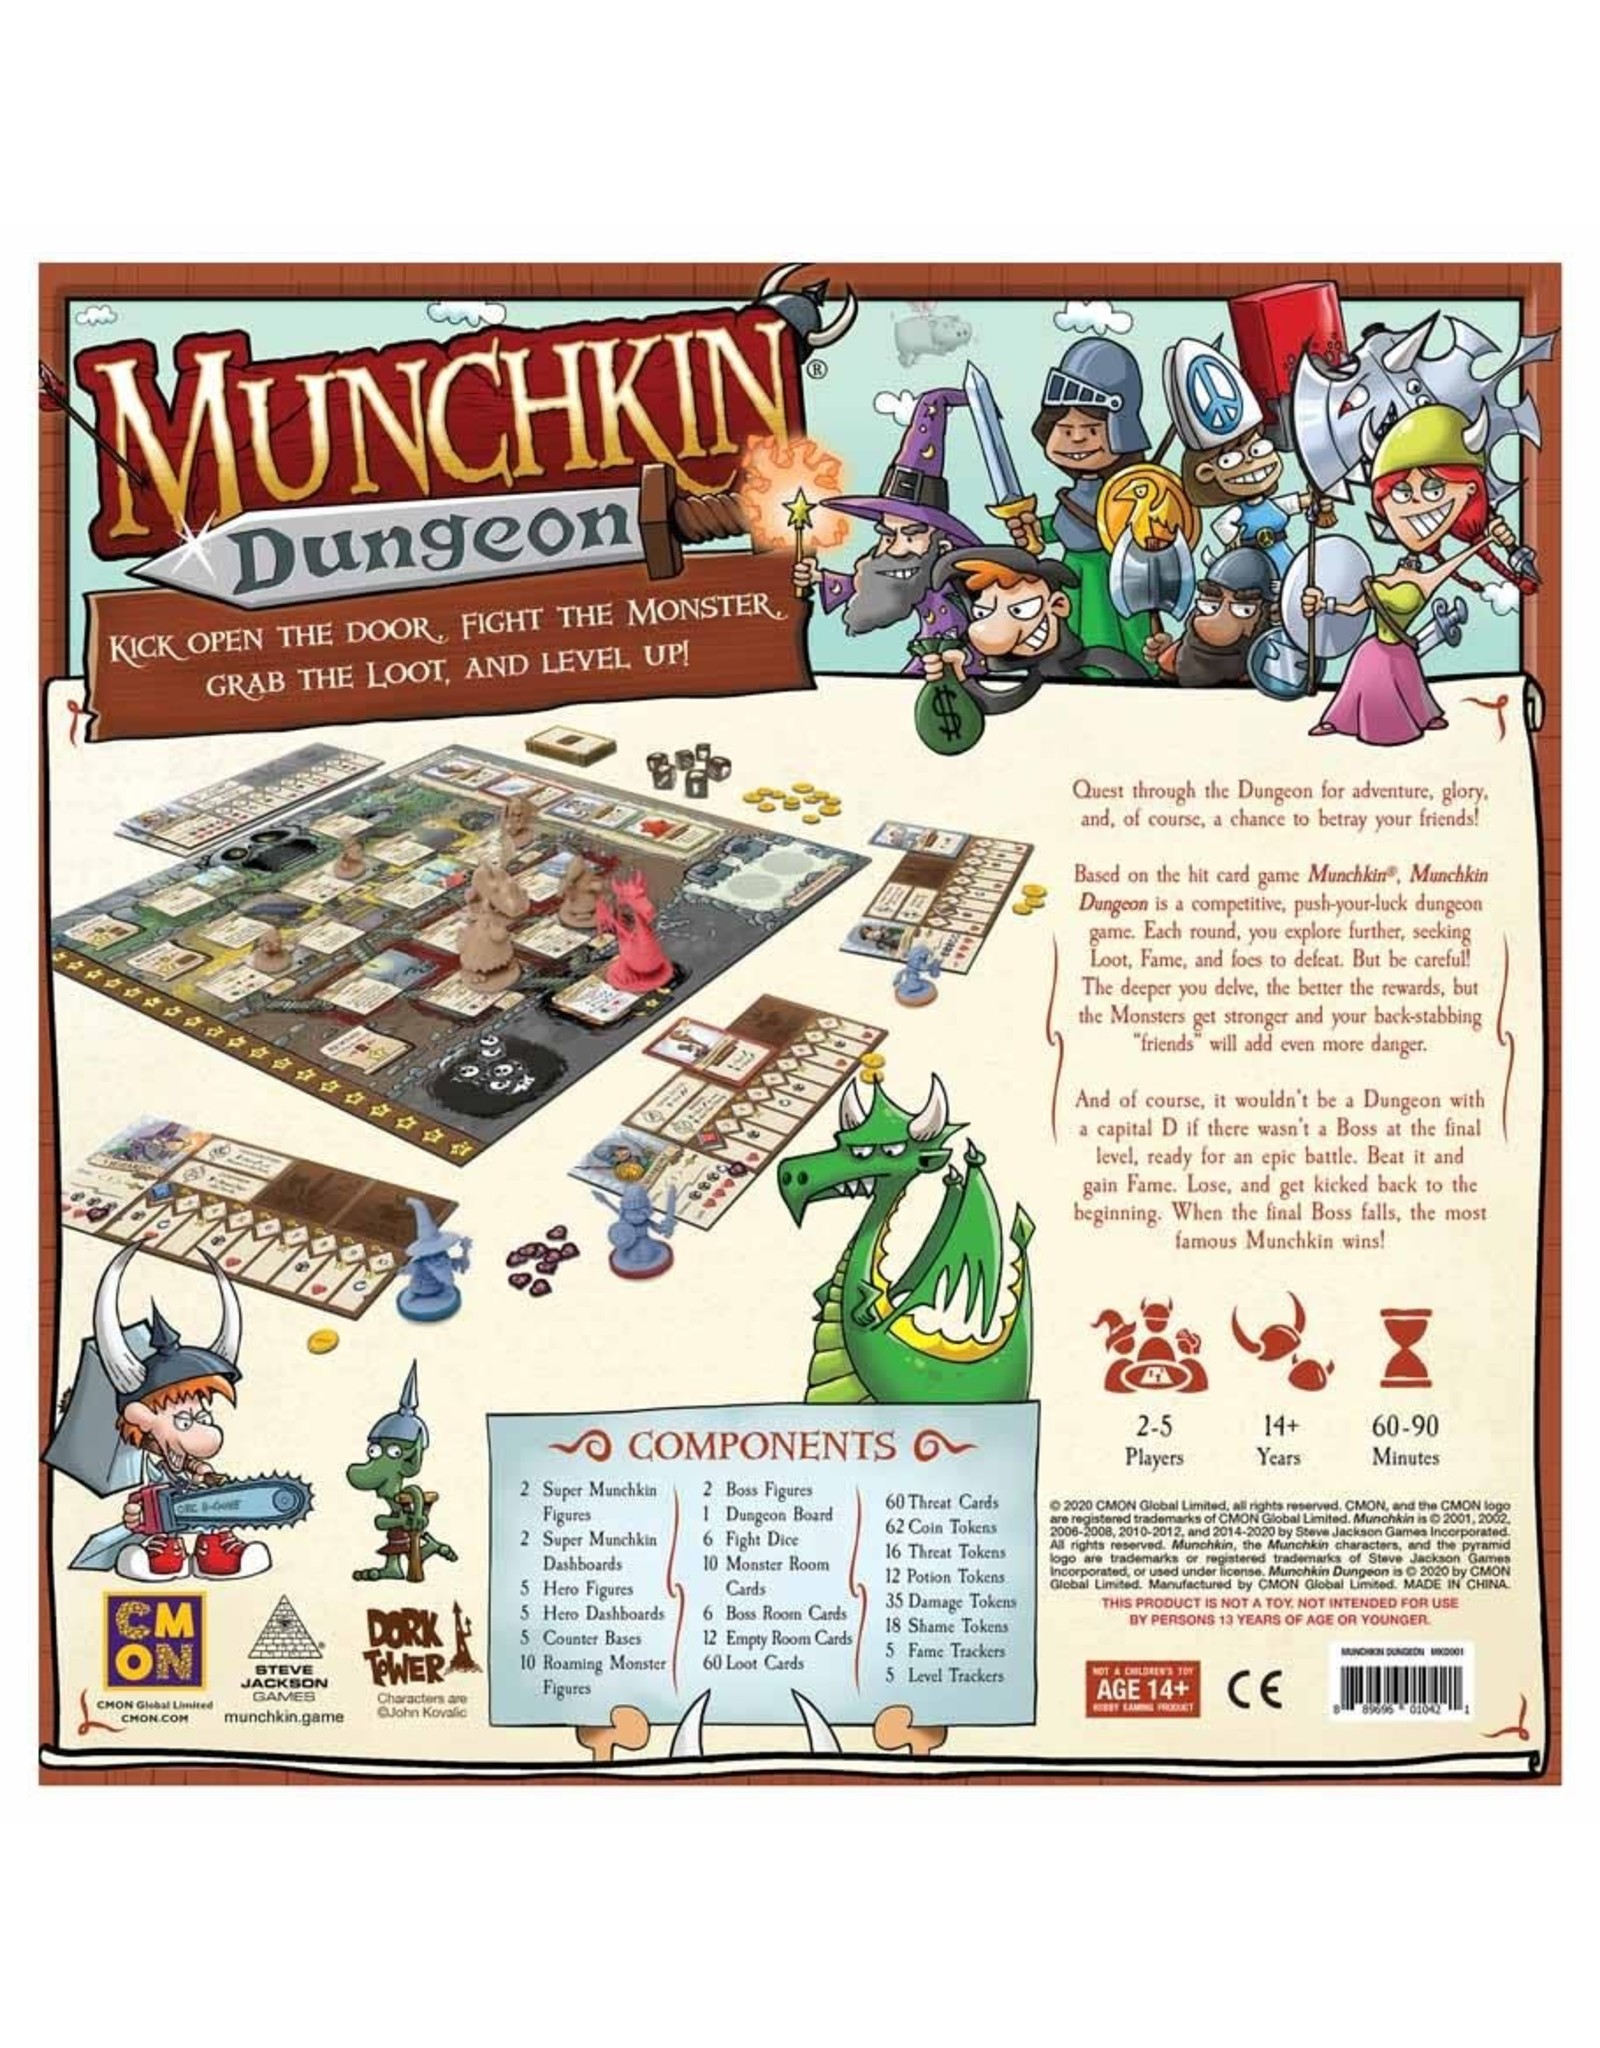 Cool Mini or Not Munchkin Dungeon